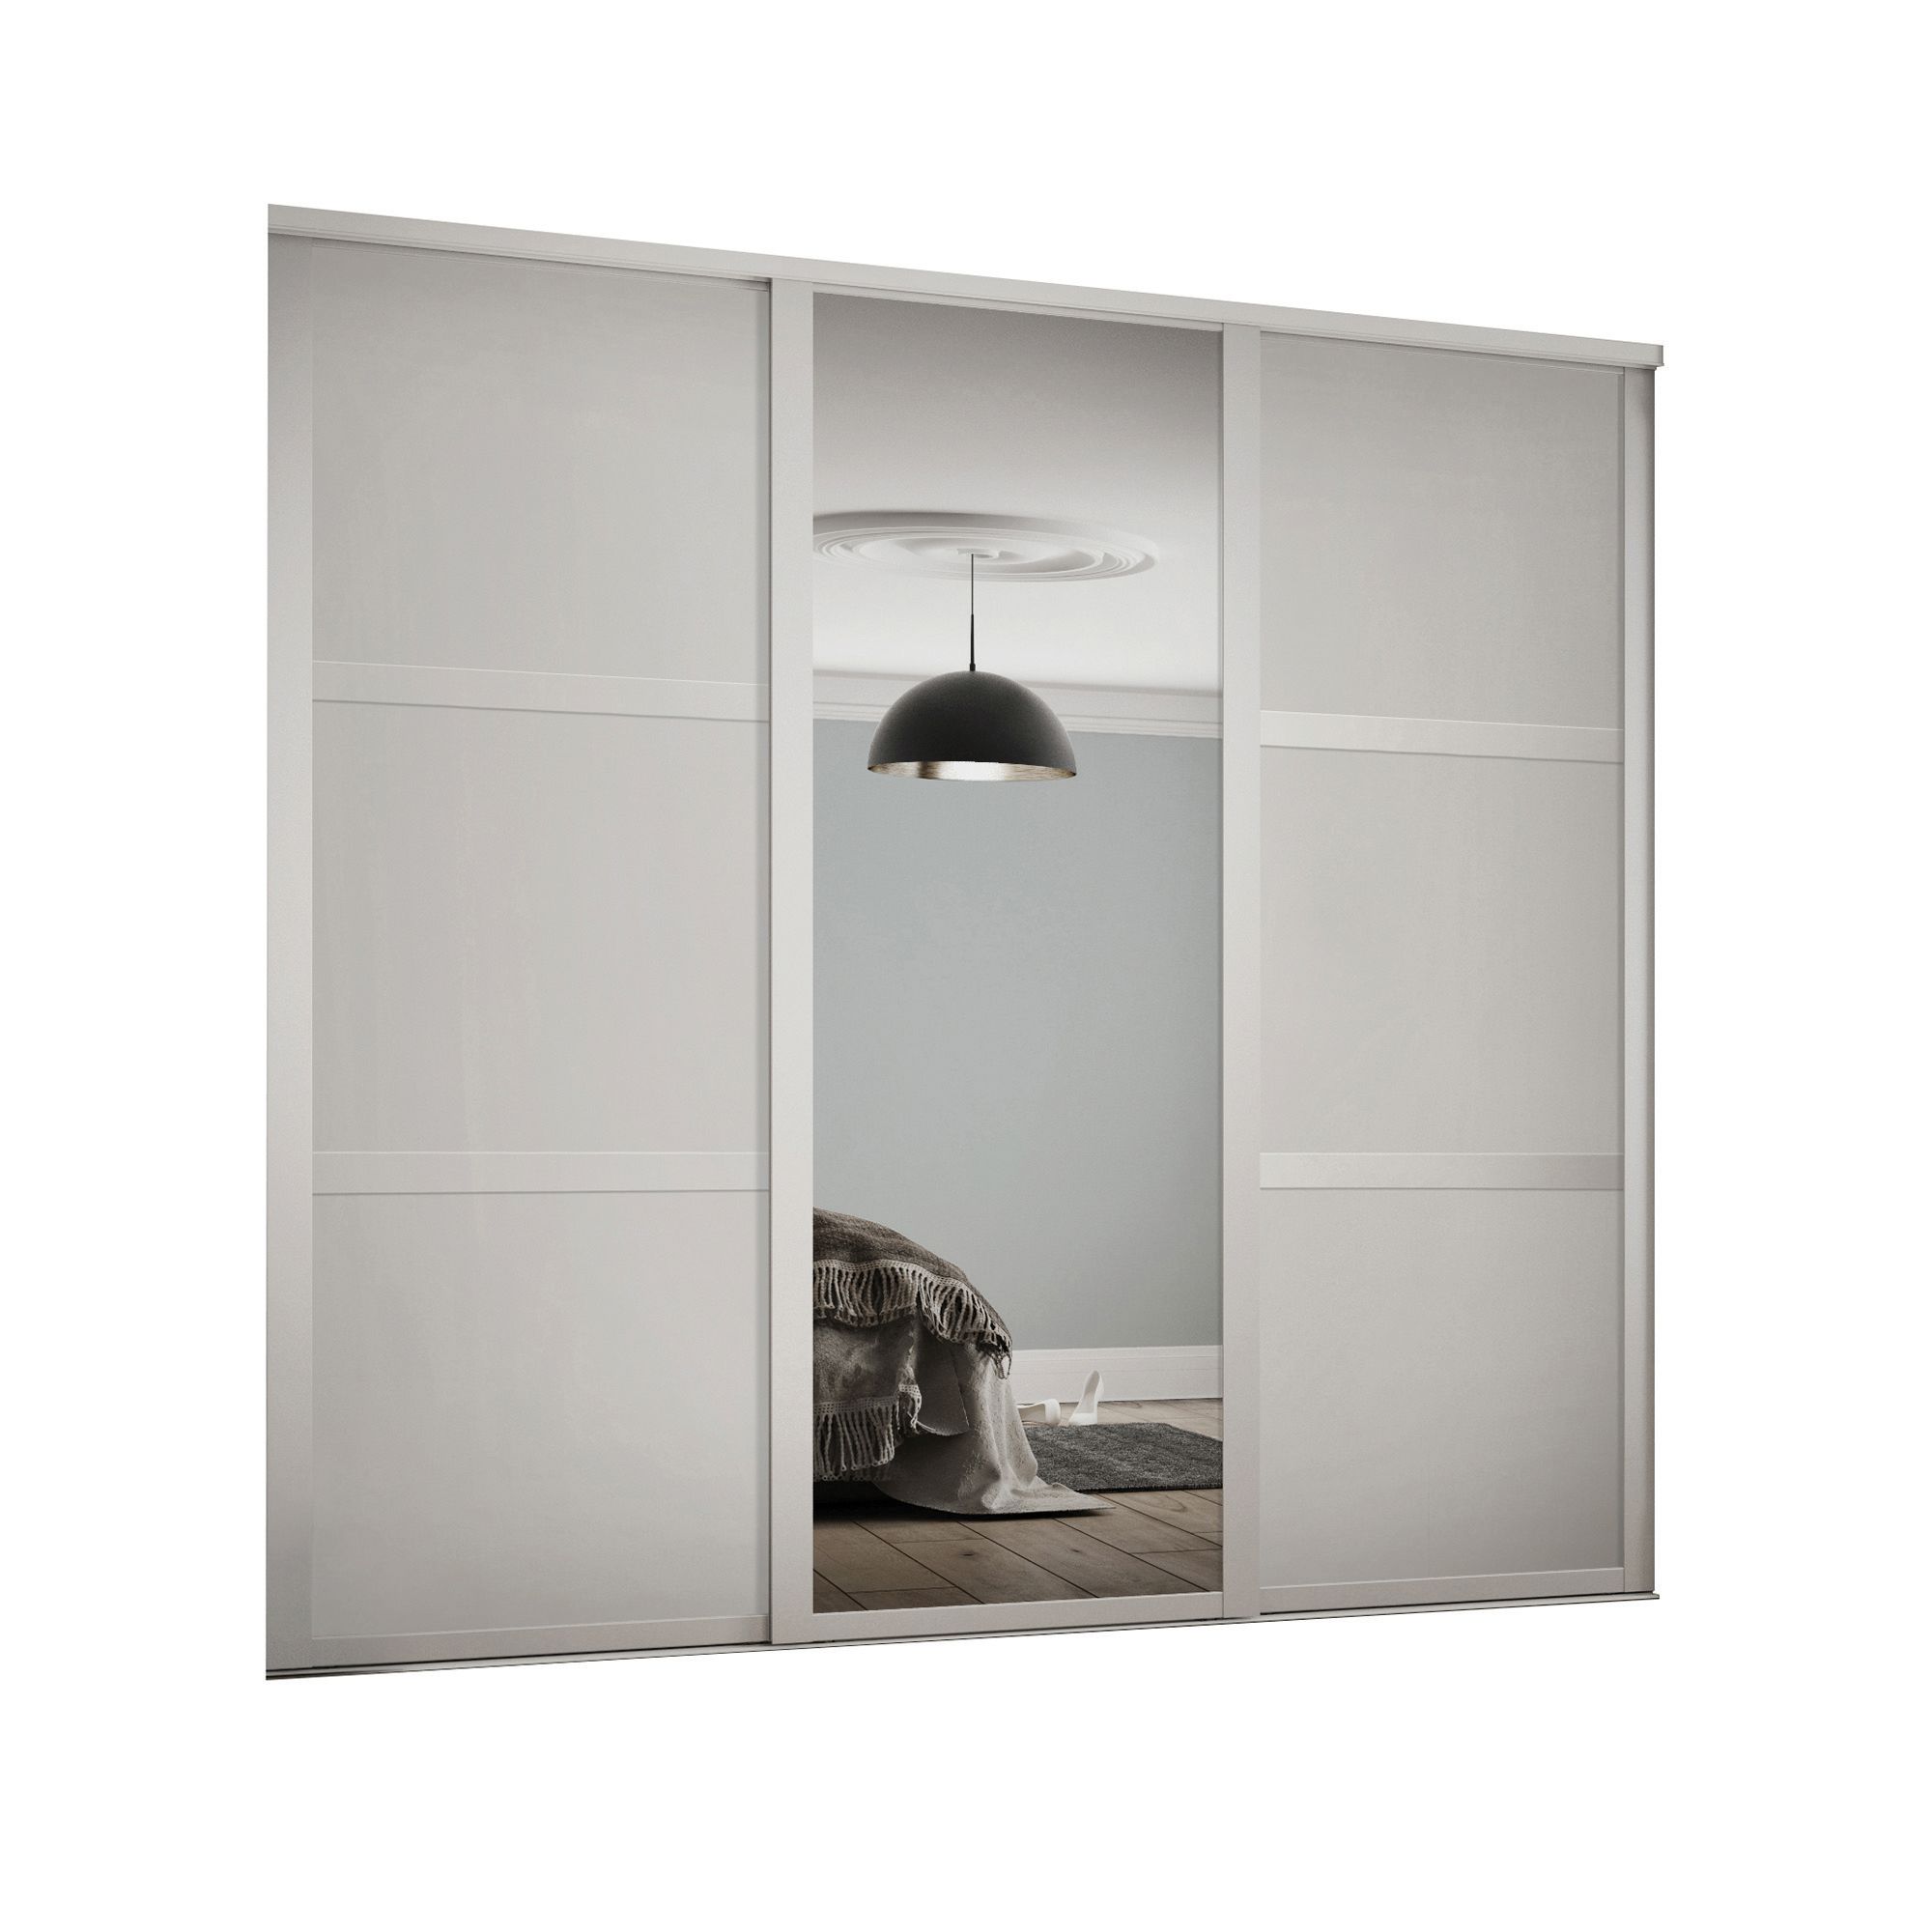 Image of Spacepro 610mm White Shaker frame 3 panel & 1x Single panel Mirror Sliding Wardrobe Door Kit